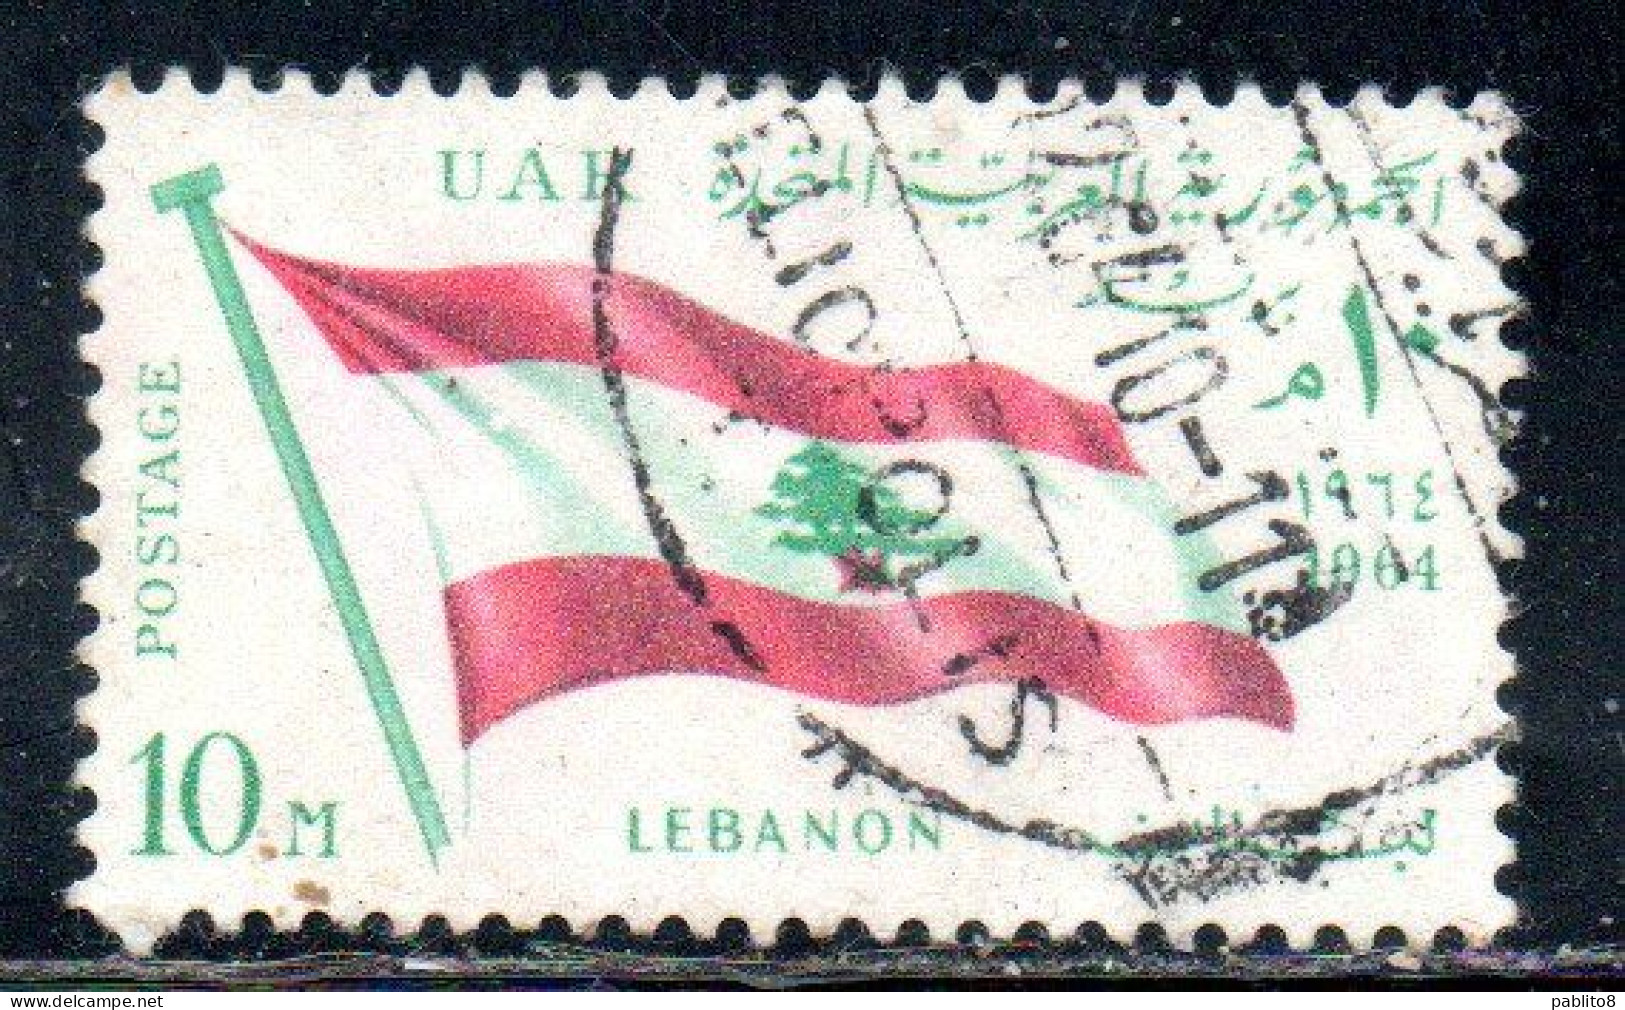 UAR EGYPT EGITTO 1964 SECOND MEETING OF HEADS STATE ARAB LEAGUE FLAG OF LEBANON 10m USED USATO OBLITERE' - Gebraucht